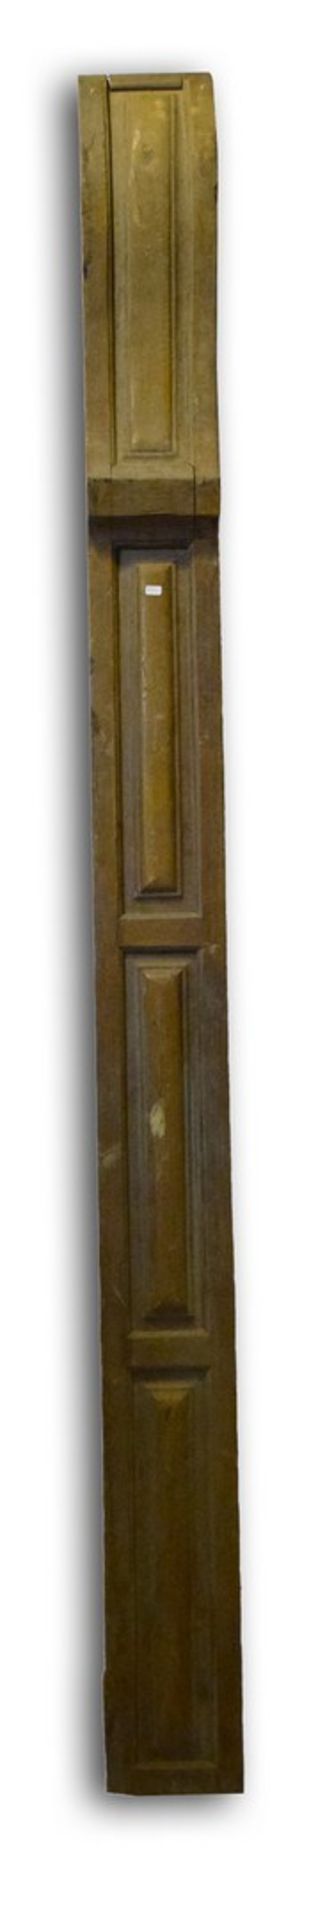 VerkleidungHartholz, rechteckiges Hochformat, mit drei Füllungen, H 195 cm, B 15 cm, 19. Jh.